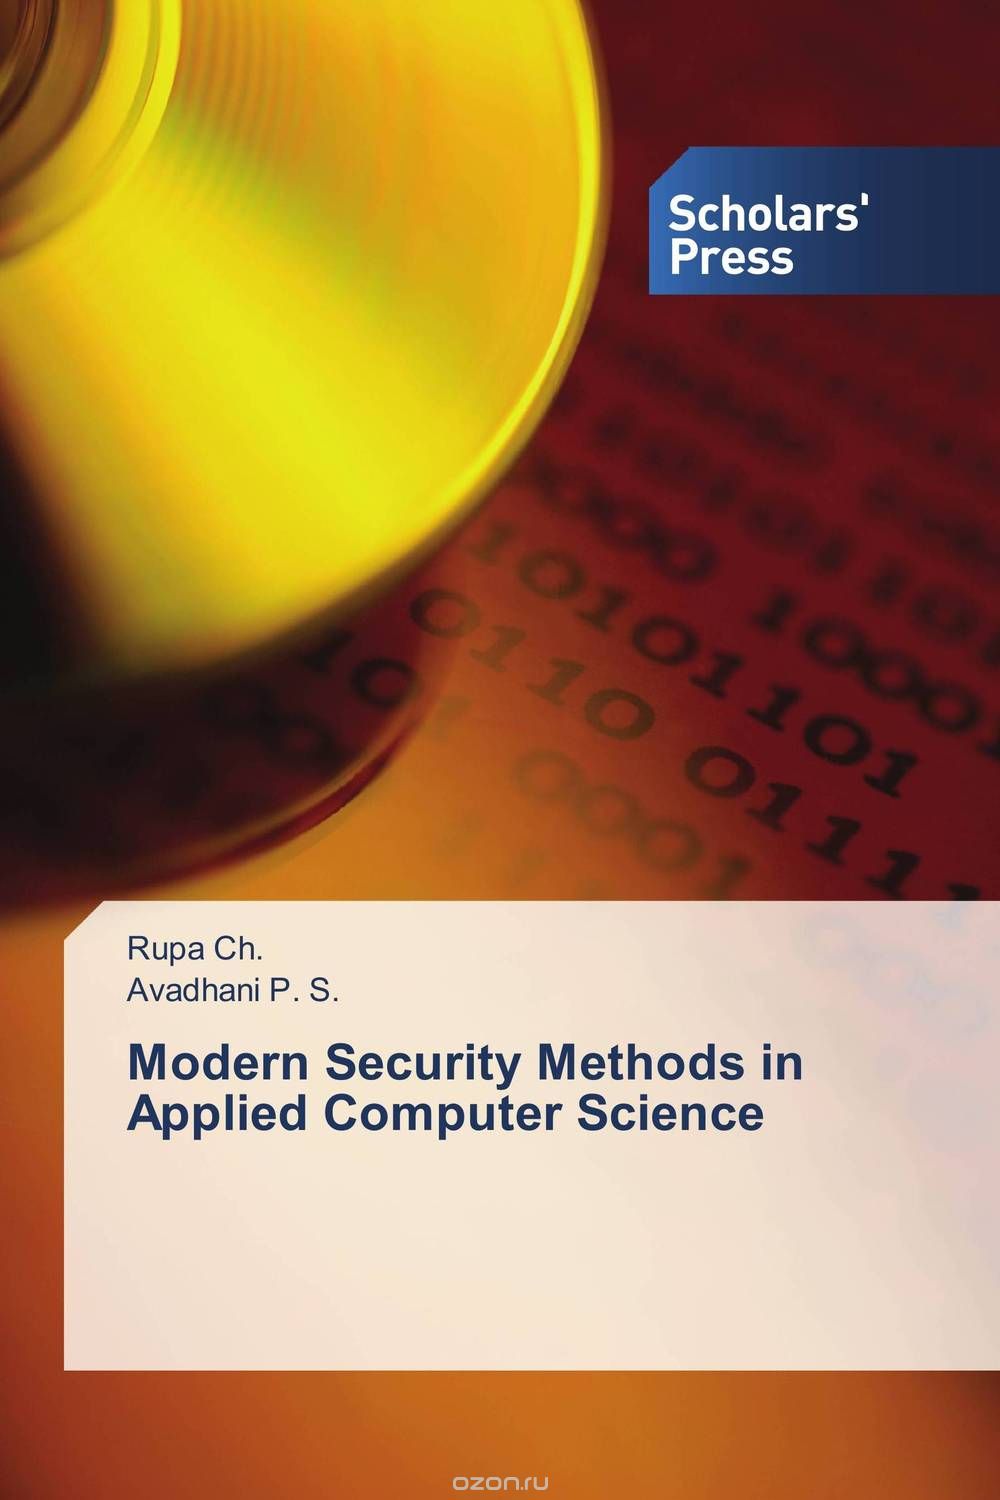 Скачать книгу "Modern Security Methods in Applied Computer Science"